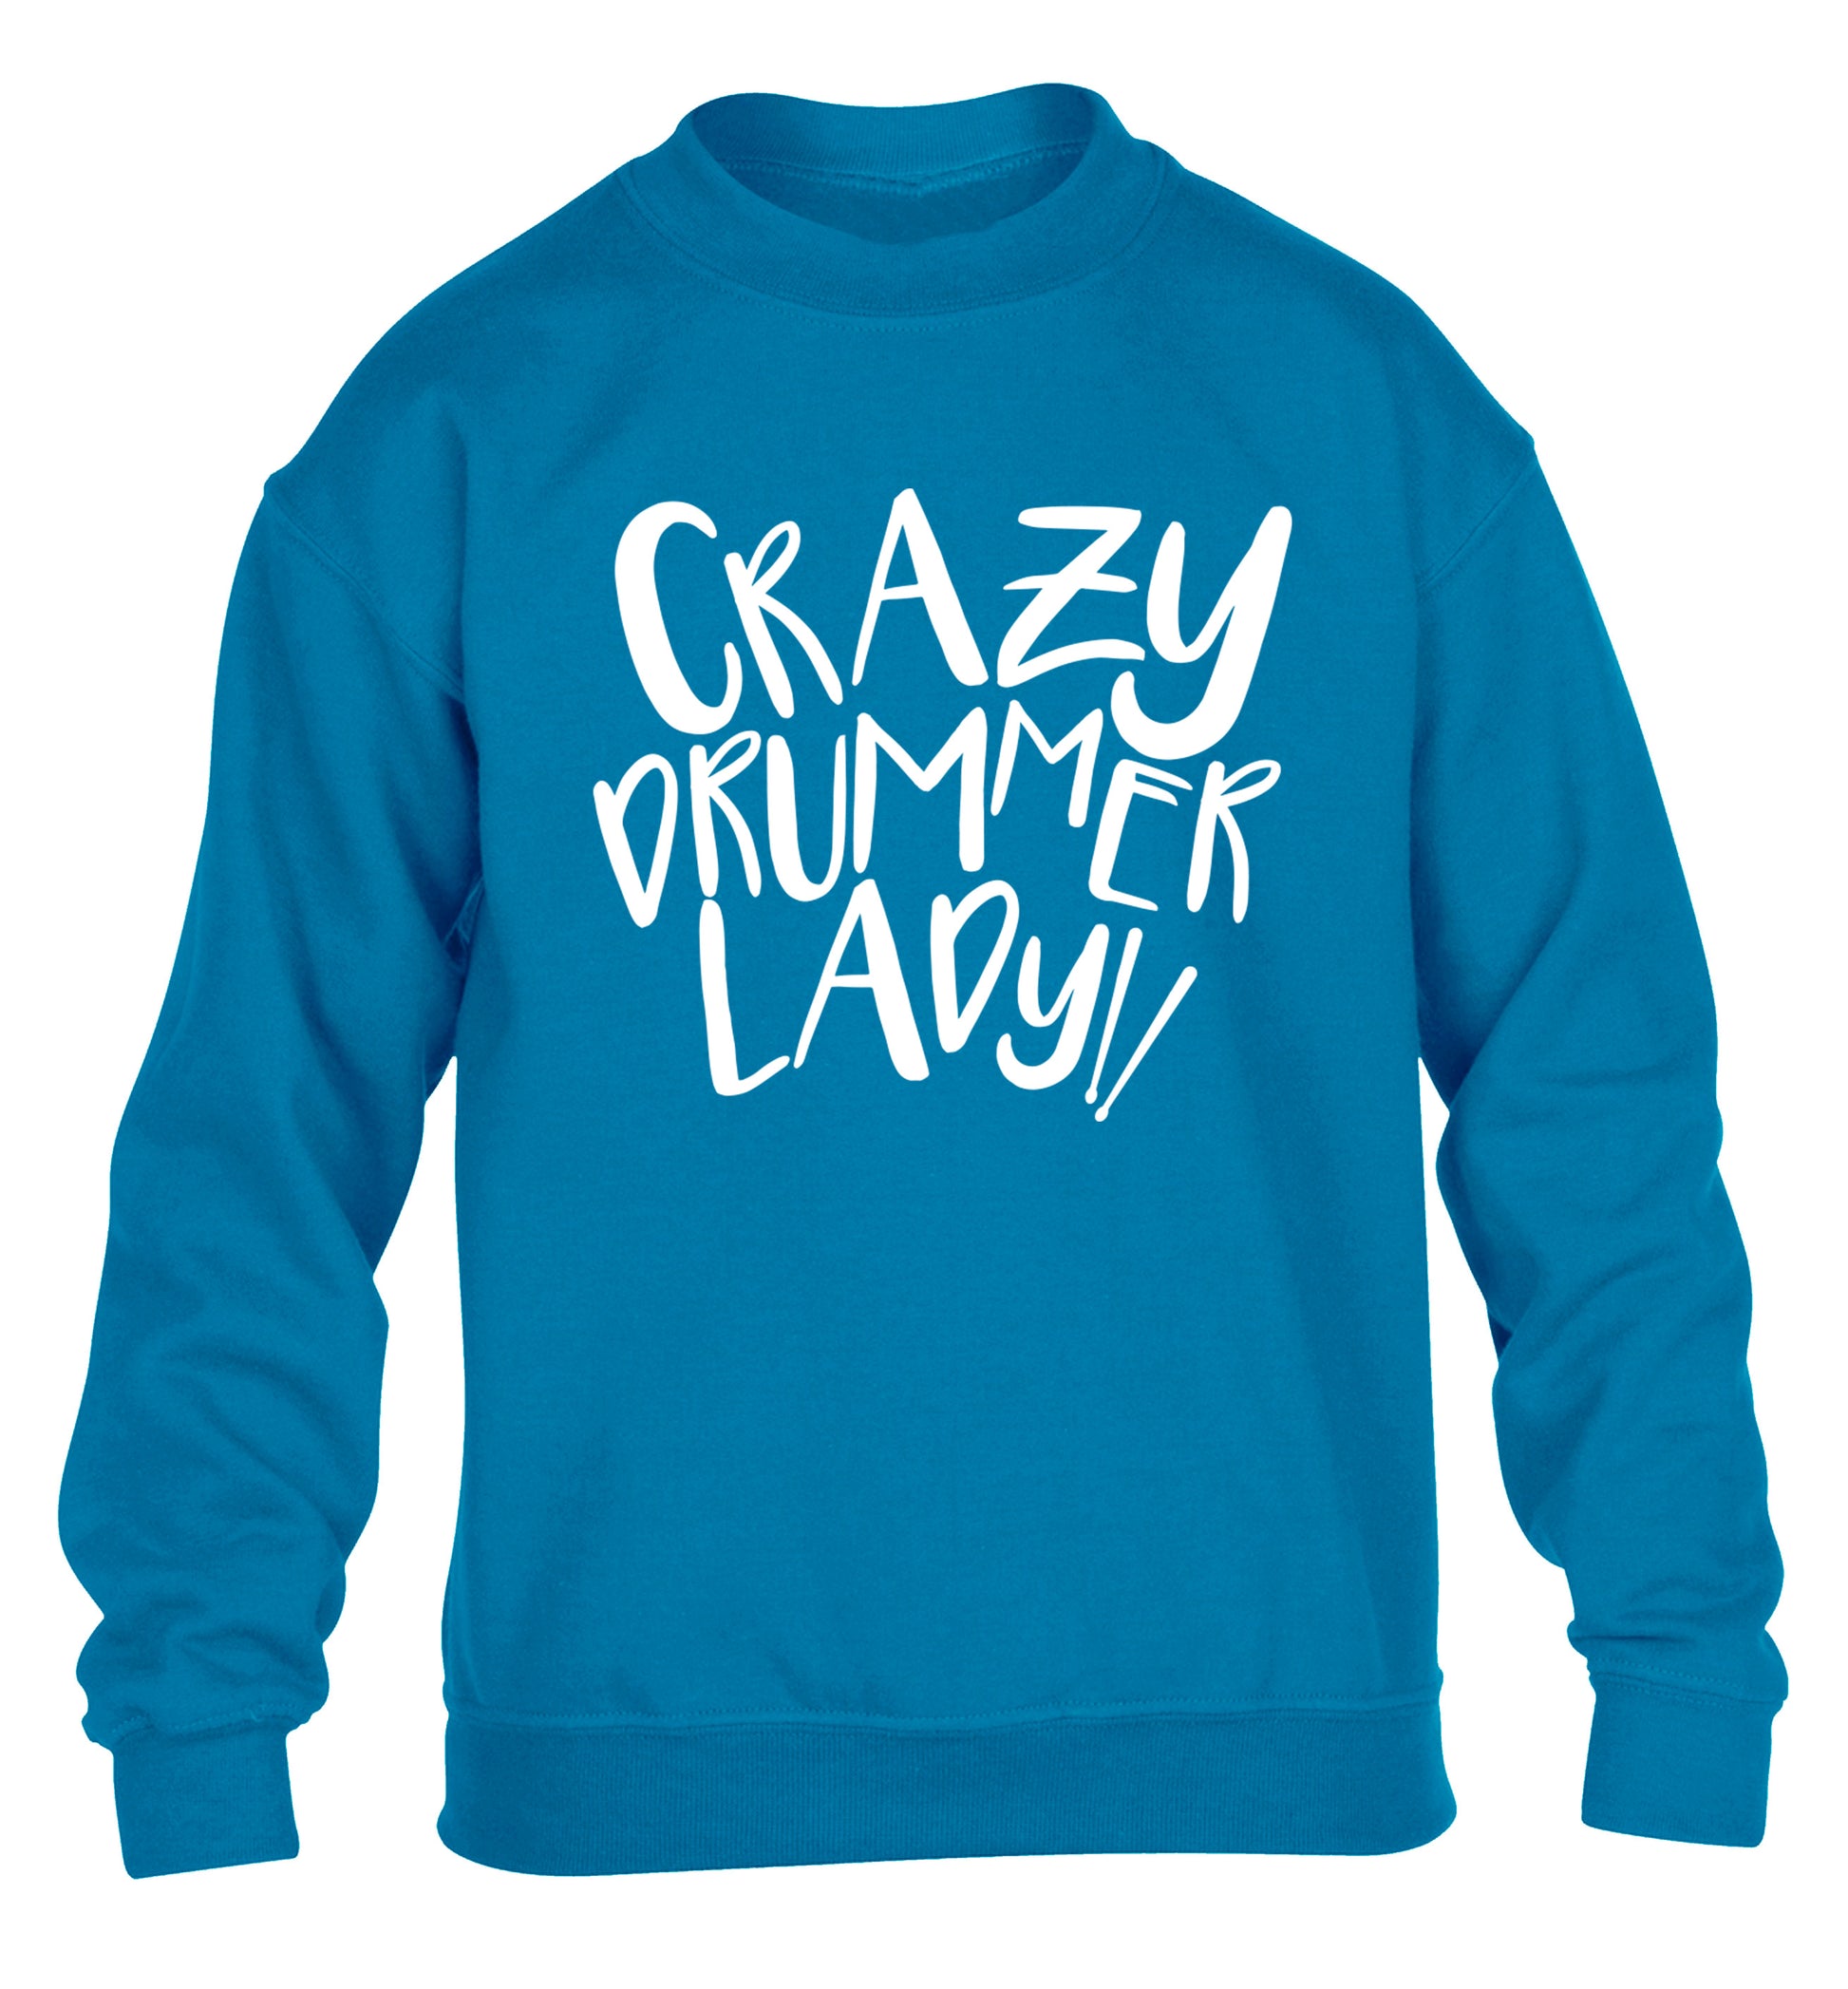 Crazy drummer lady children's blue sweater 12-14 Years